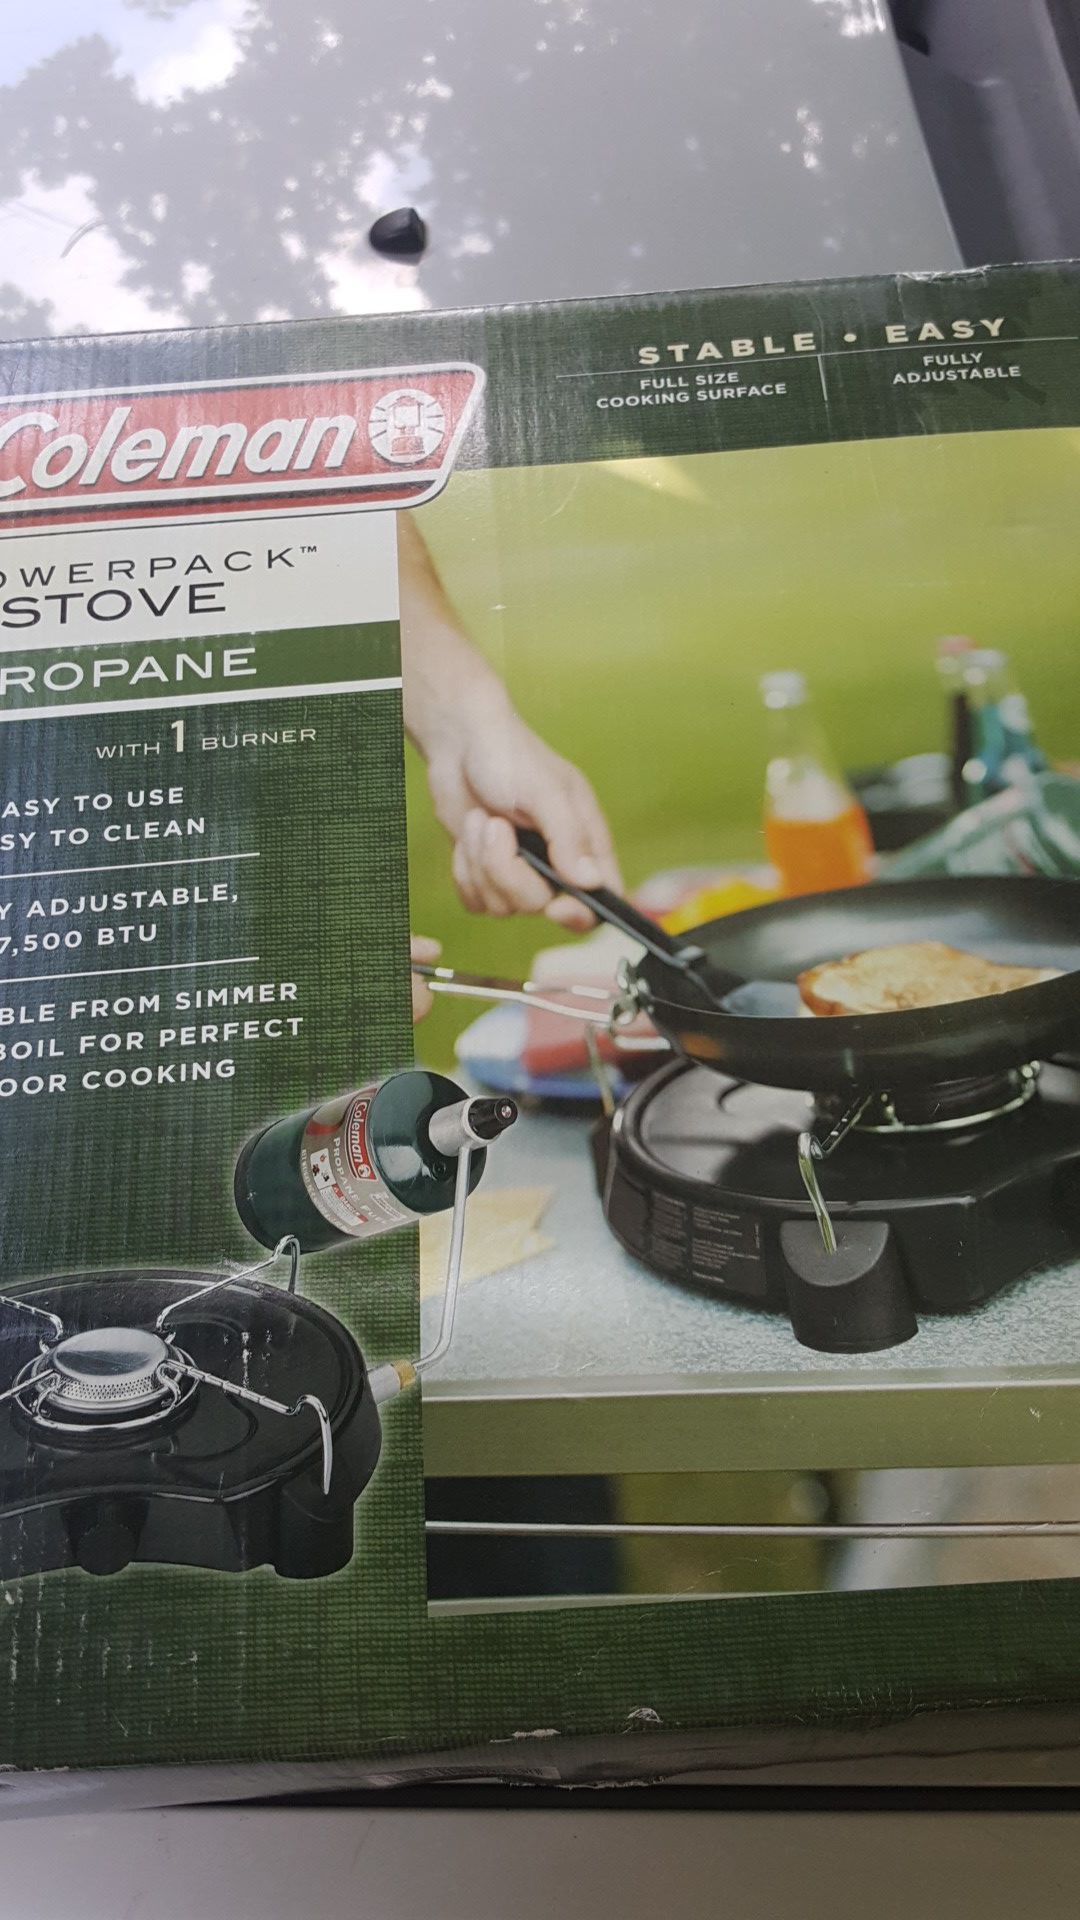 Coleman powerpack stove